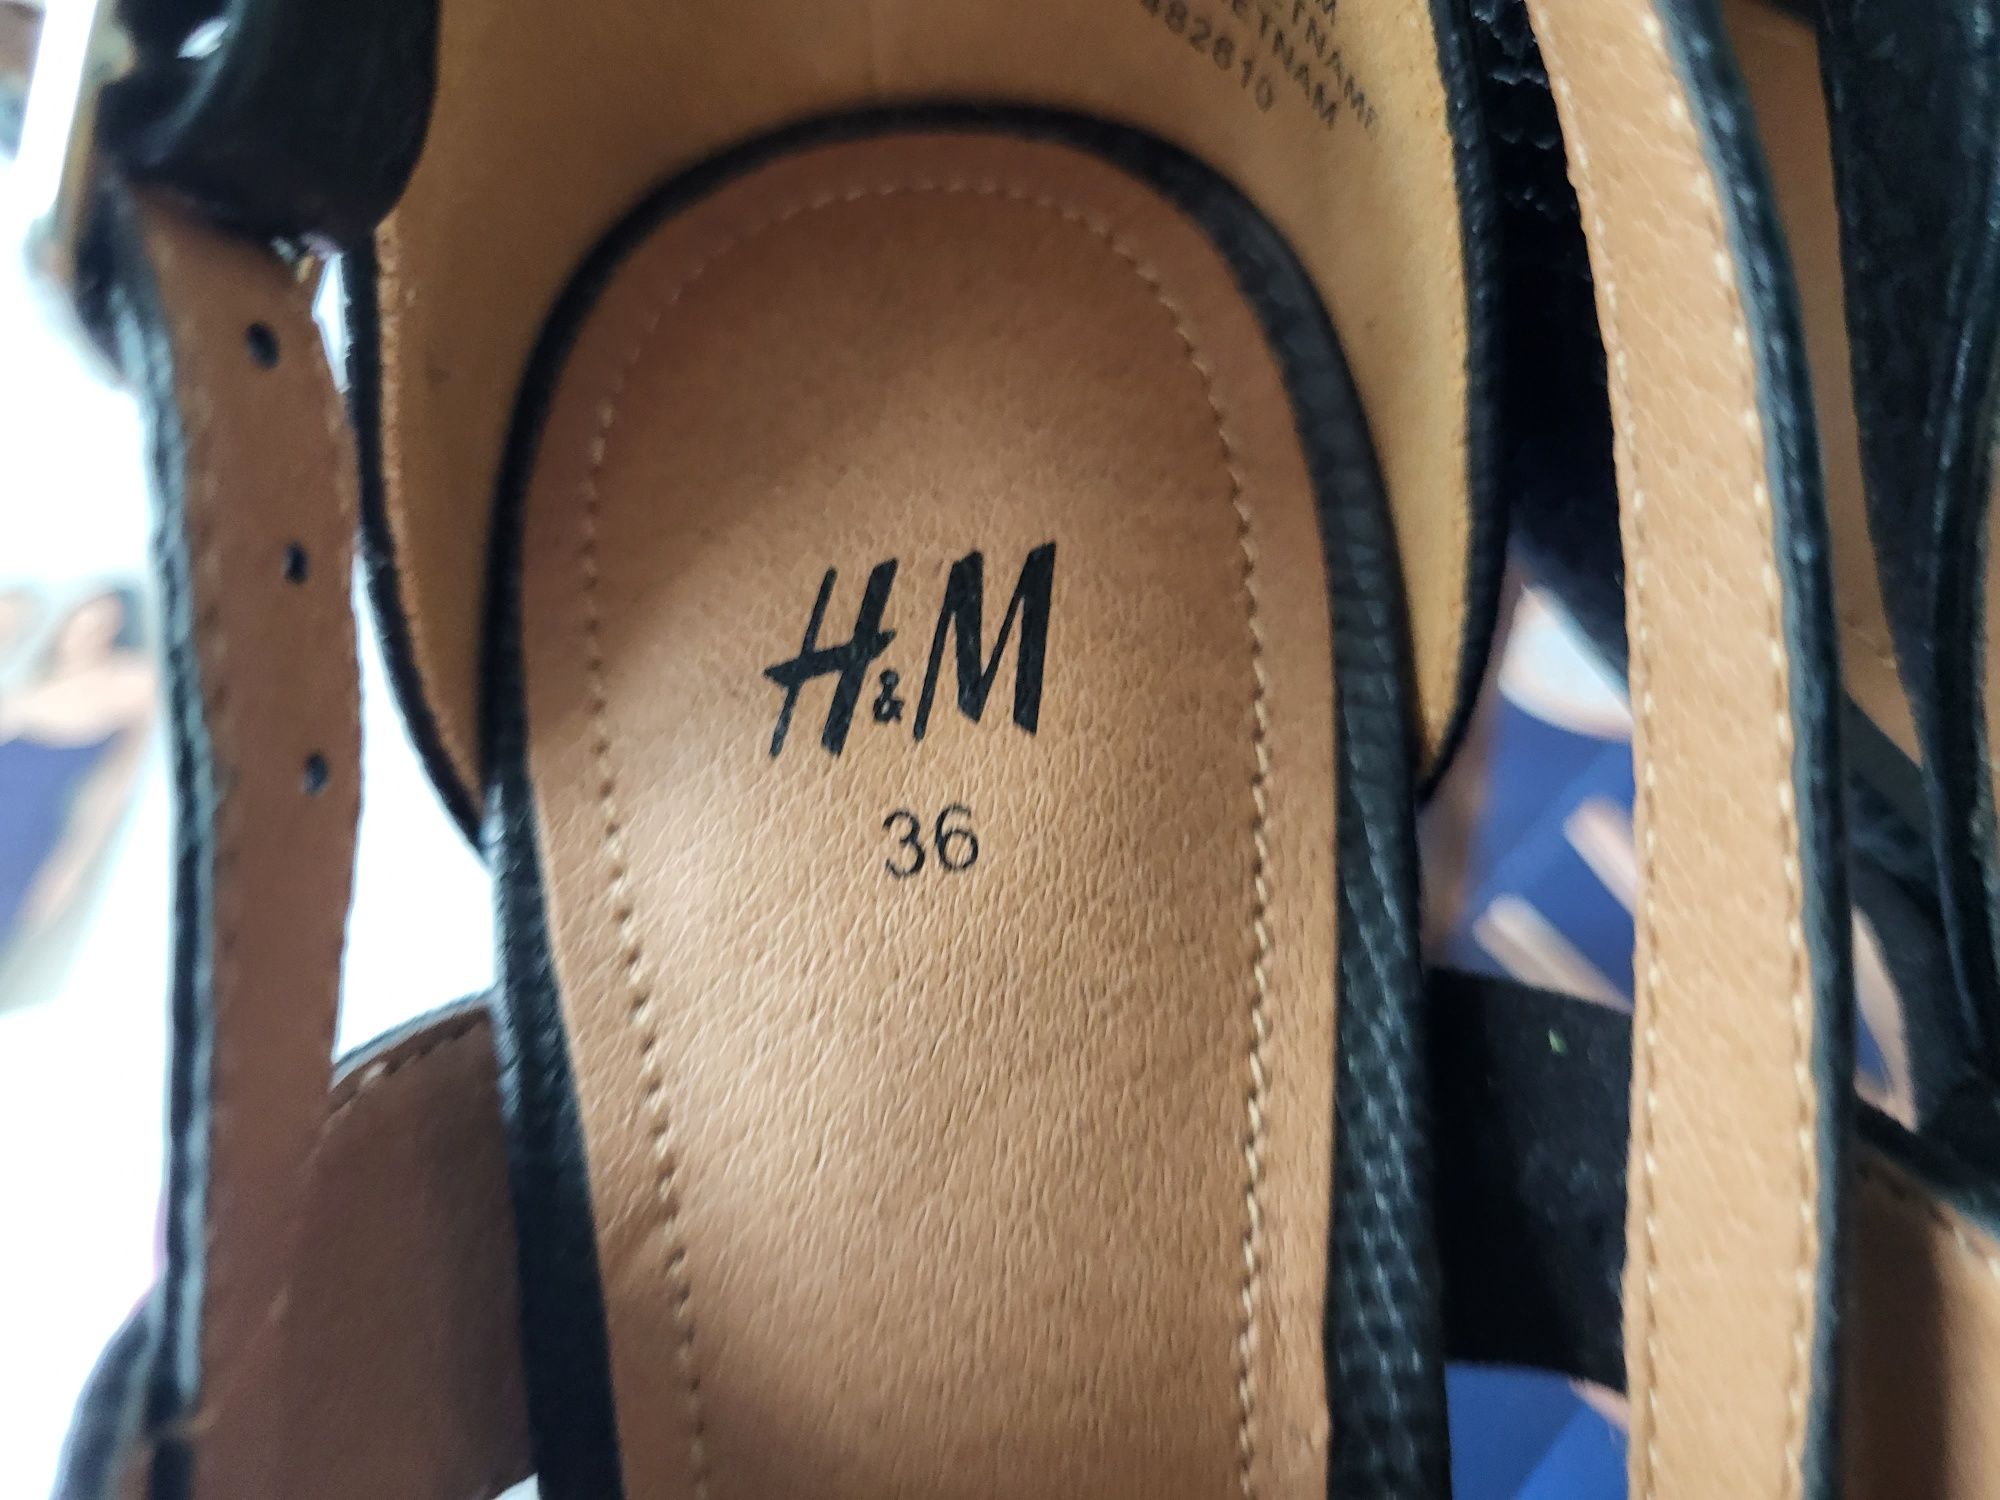 Sandały Damskie H&M r.36